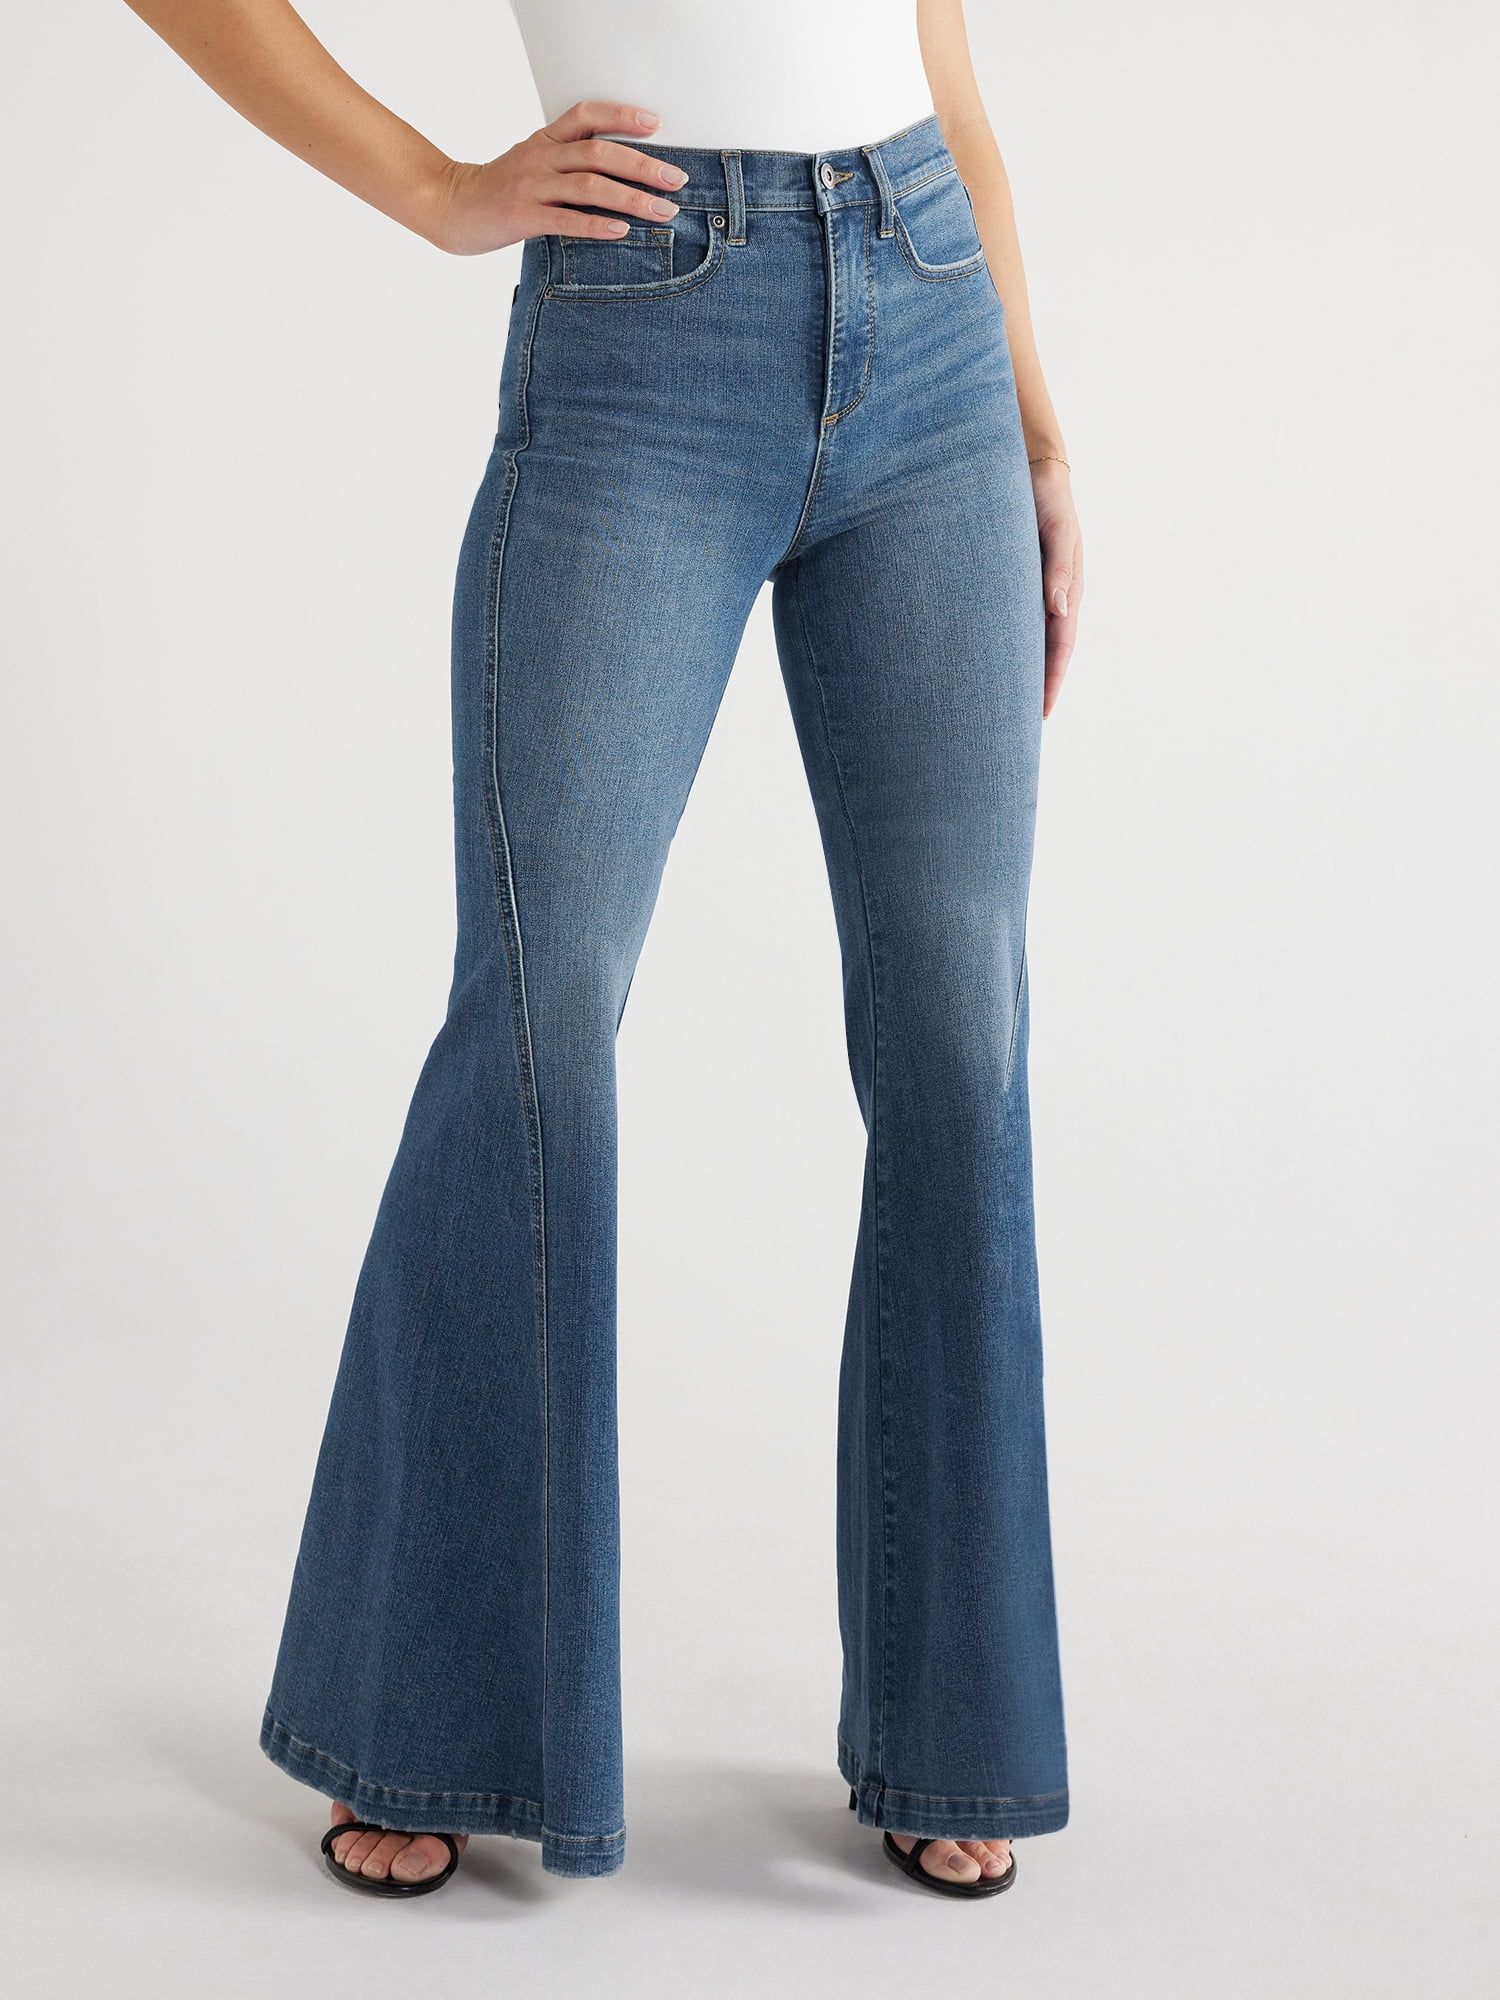 Sofia Jeans Women's Melisa Mega Flare Super High Rise Jeans, 33" Inseam, Sizes 0-20 | Walmart (US)